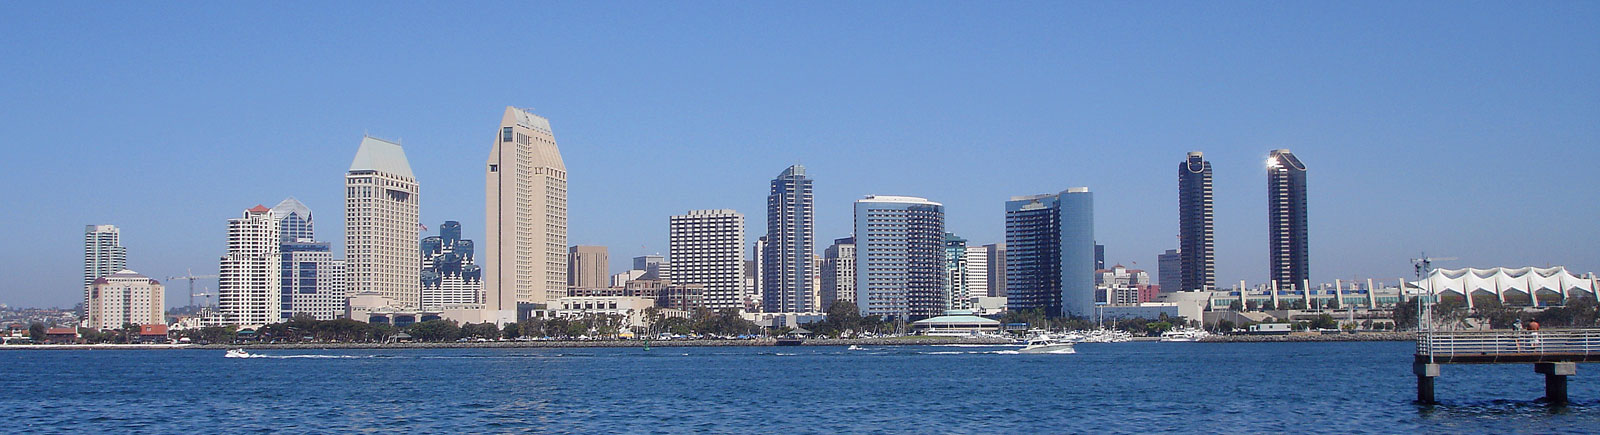 San Diego Convention Center, California